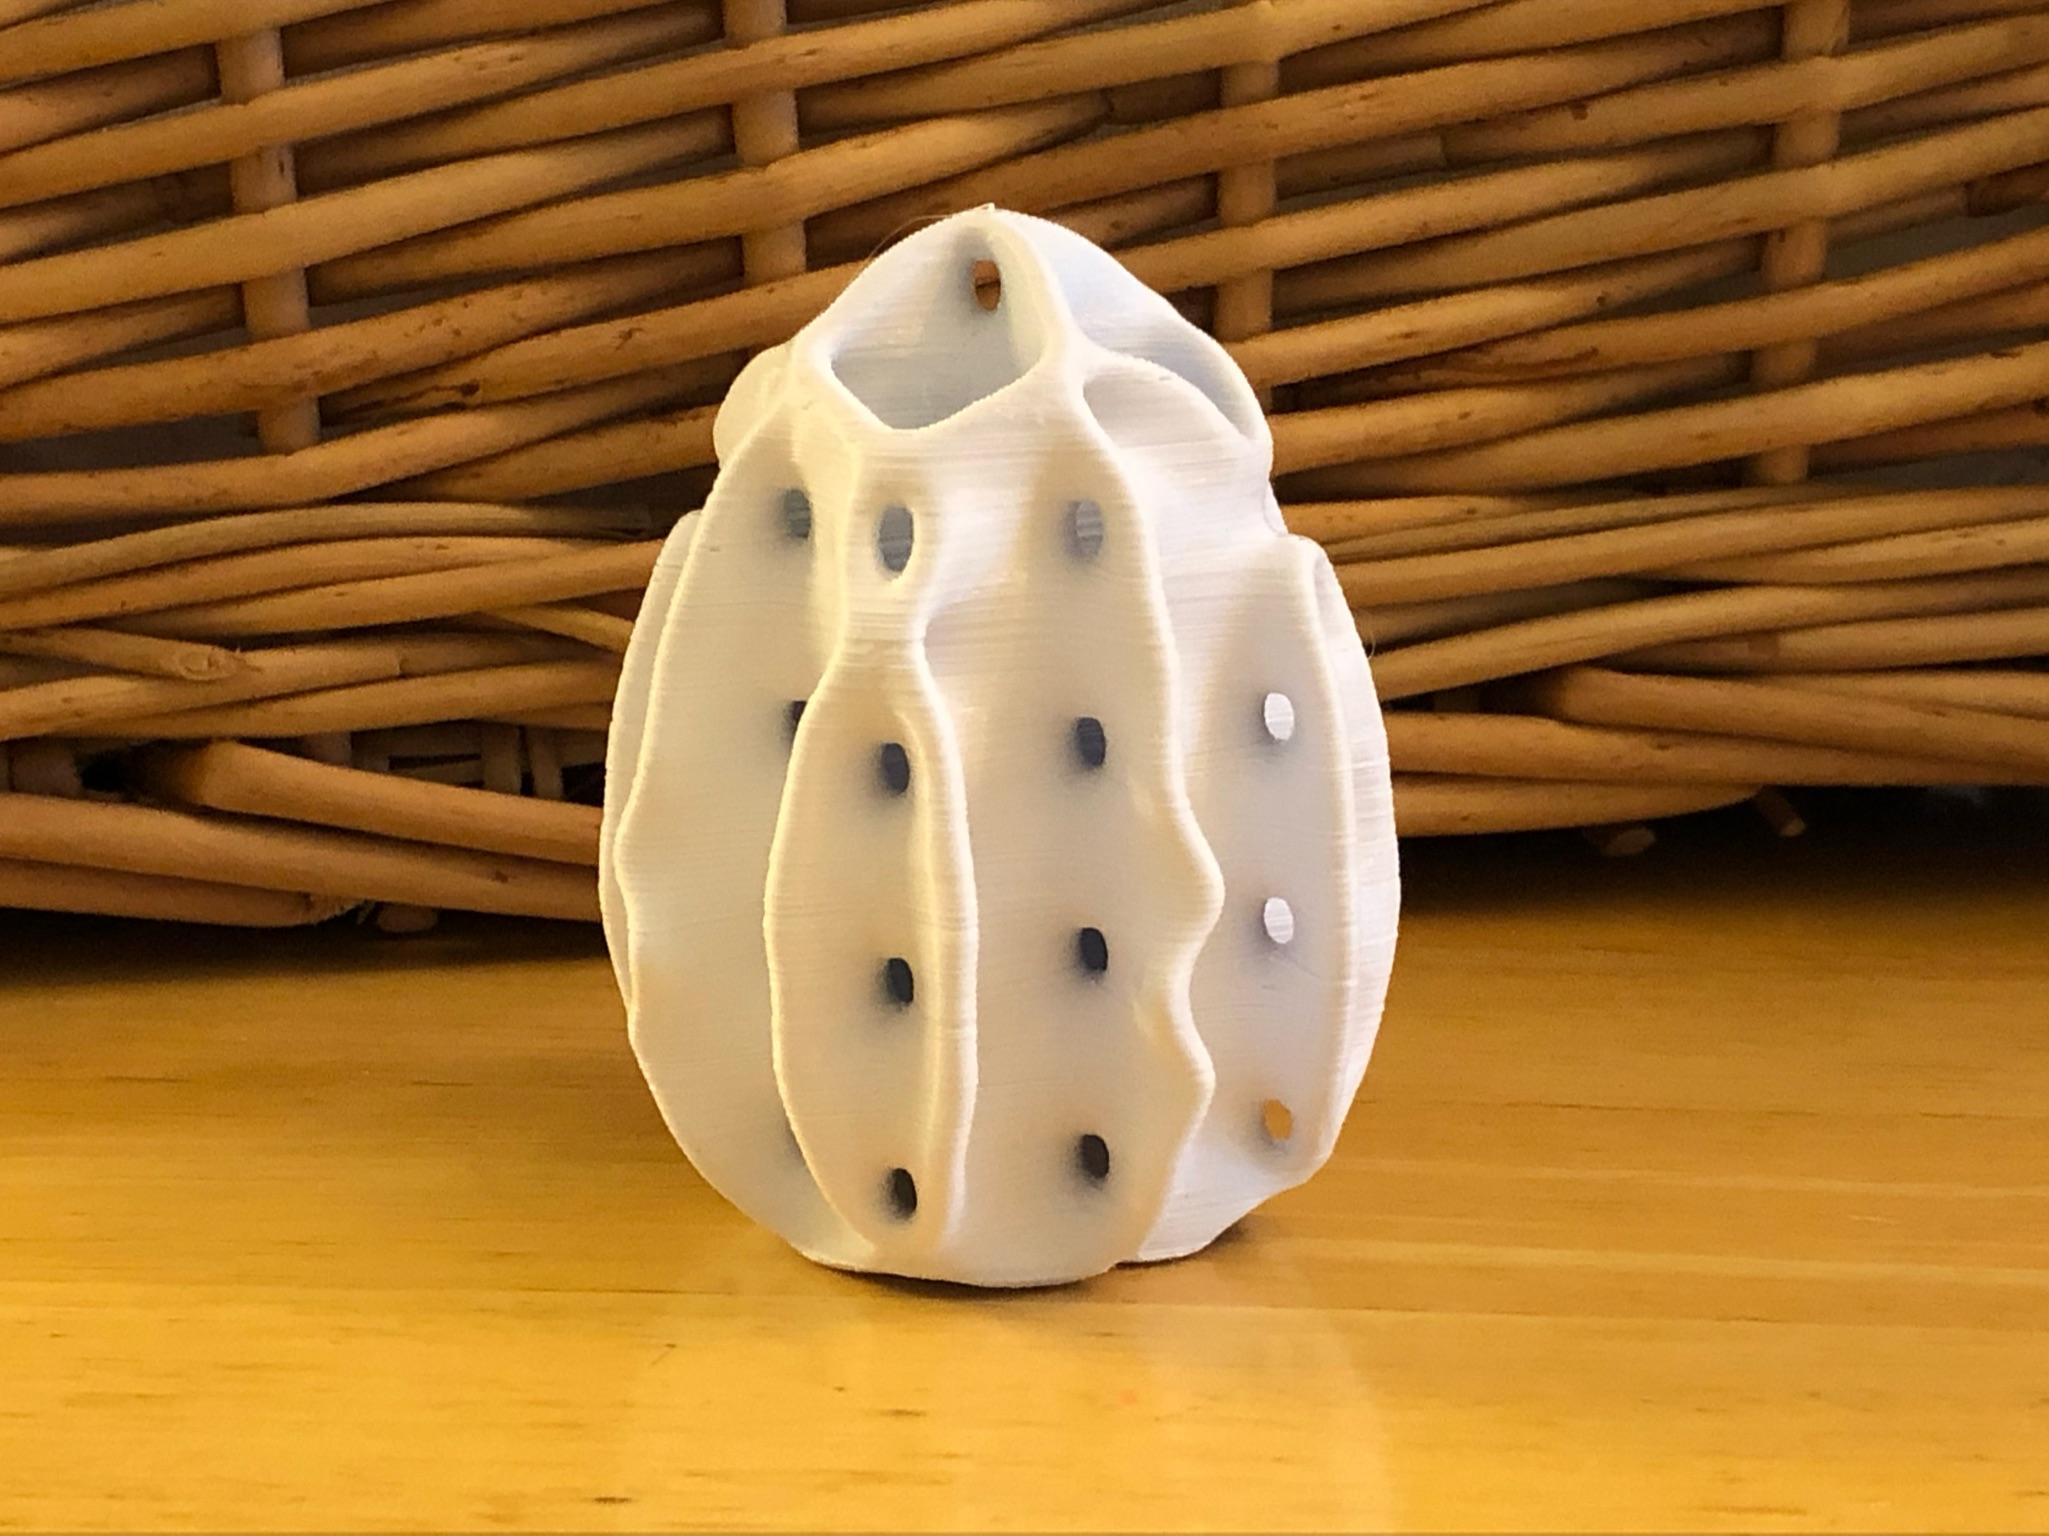 Schwarz CLP Egg 3d model